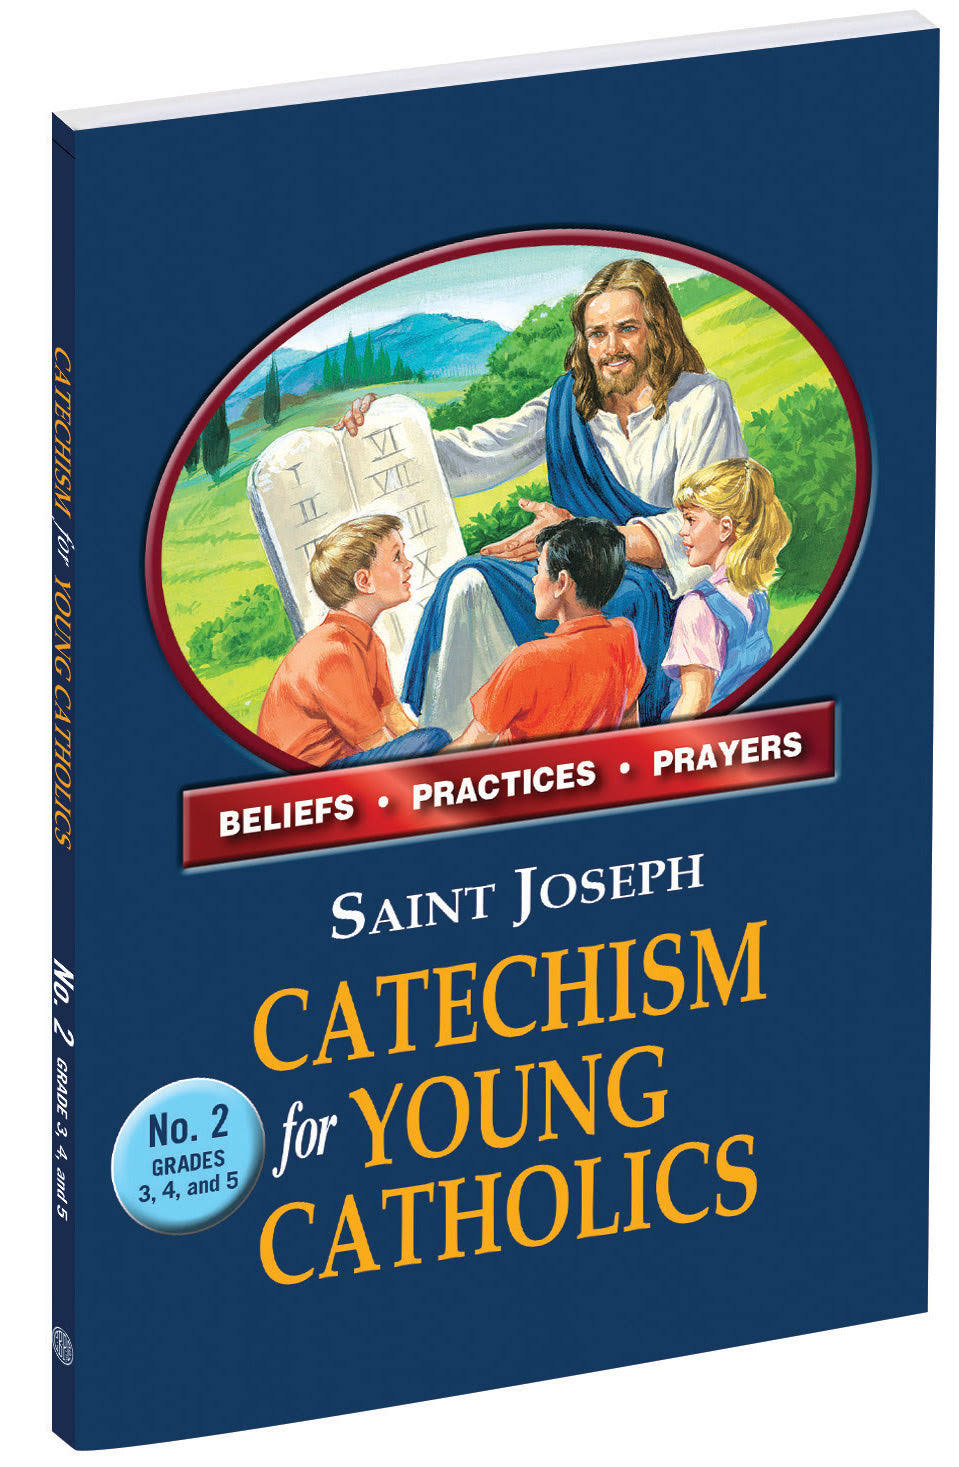 Saint Joseph Catechism for Young Catholics Volume 2